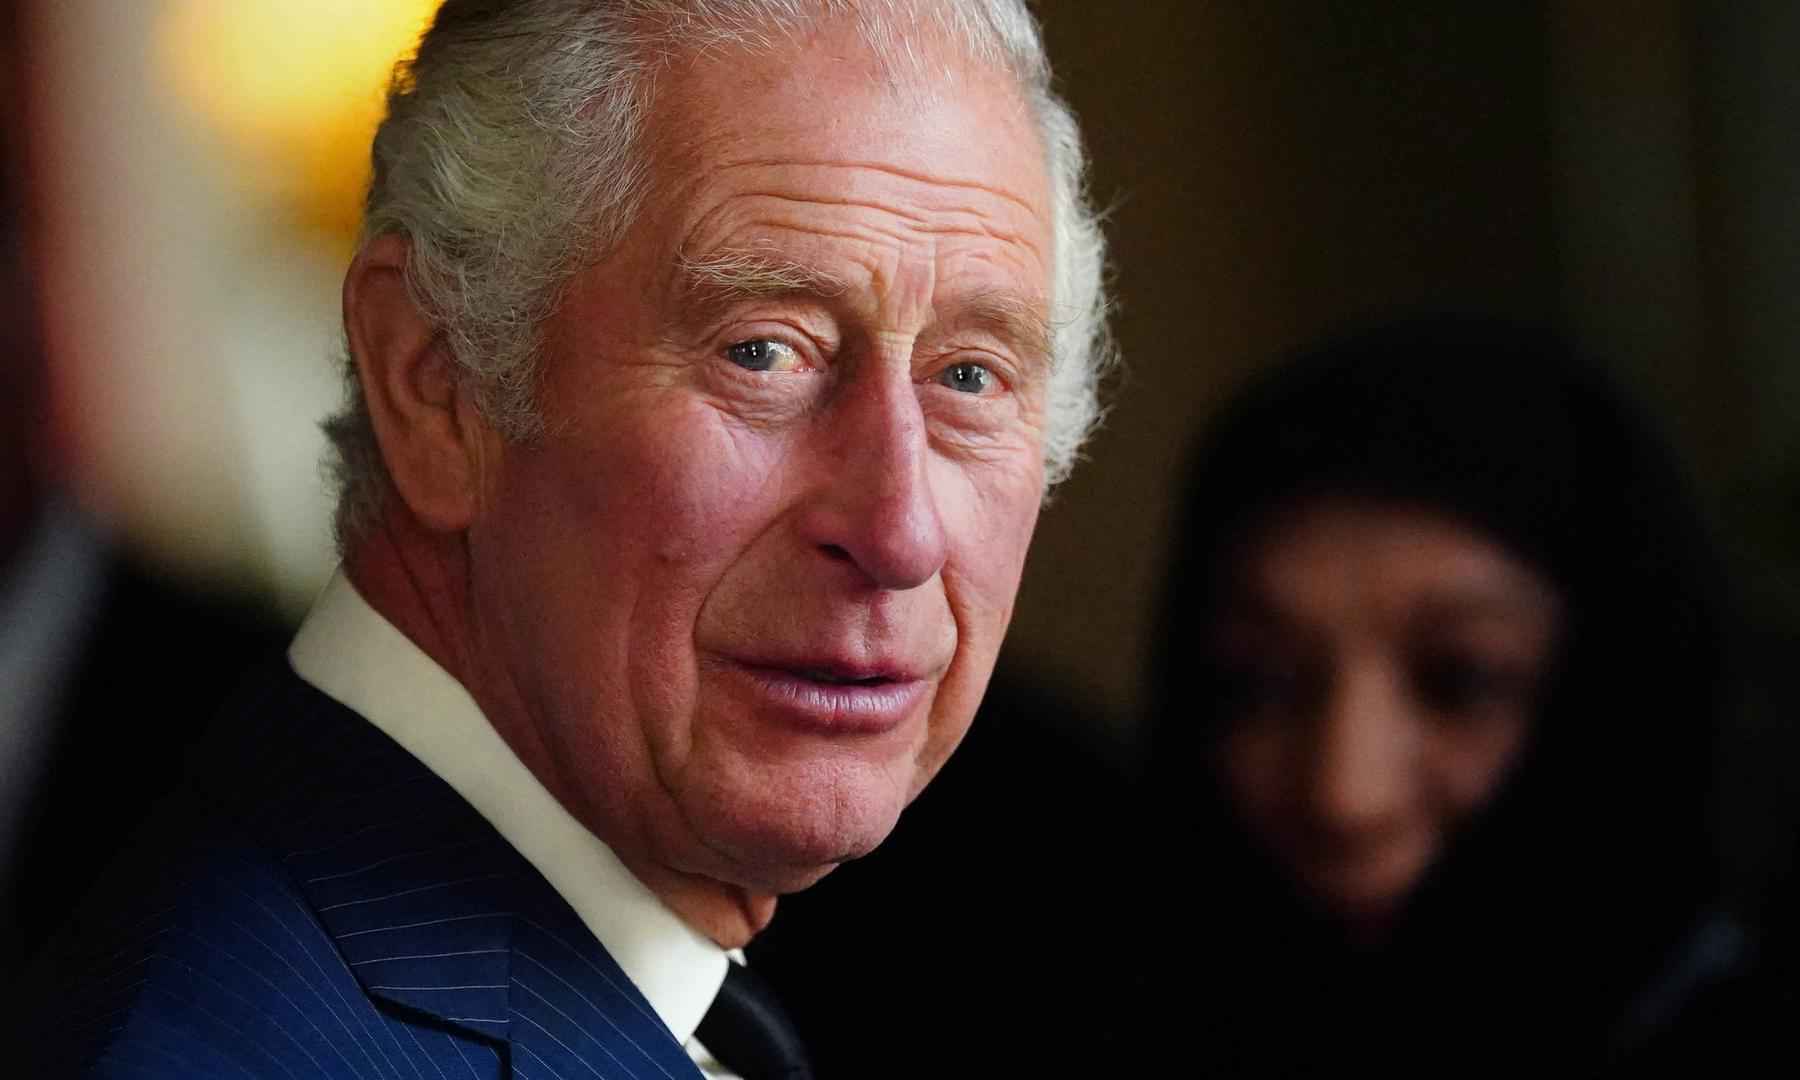 Charles III: viraliza vídeo em que o rei ordena arrumação de mesa - Victoria Jones / POOL / AFP

